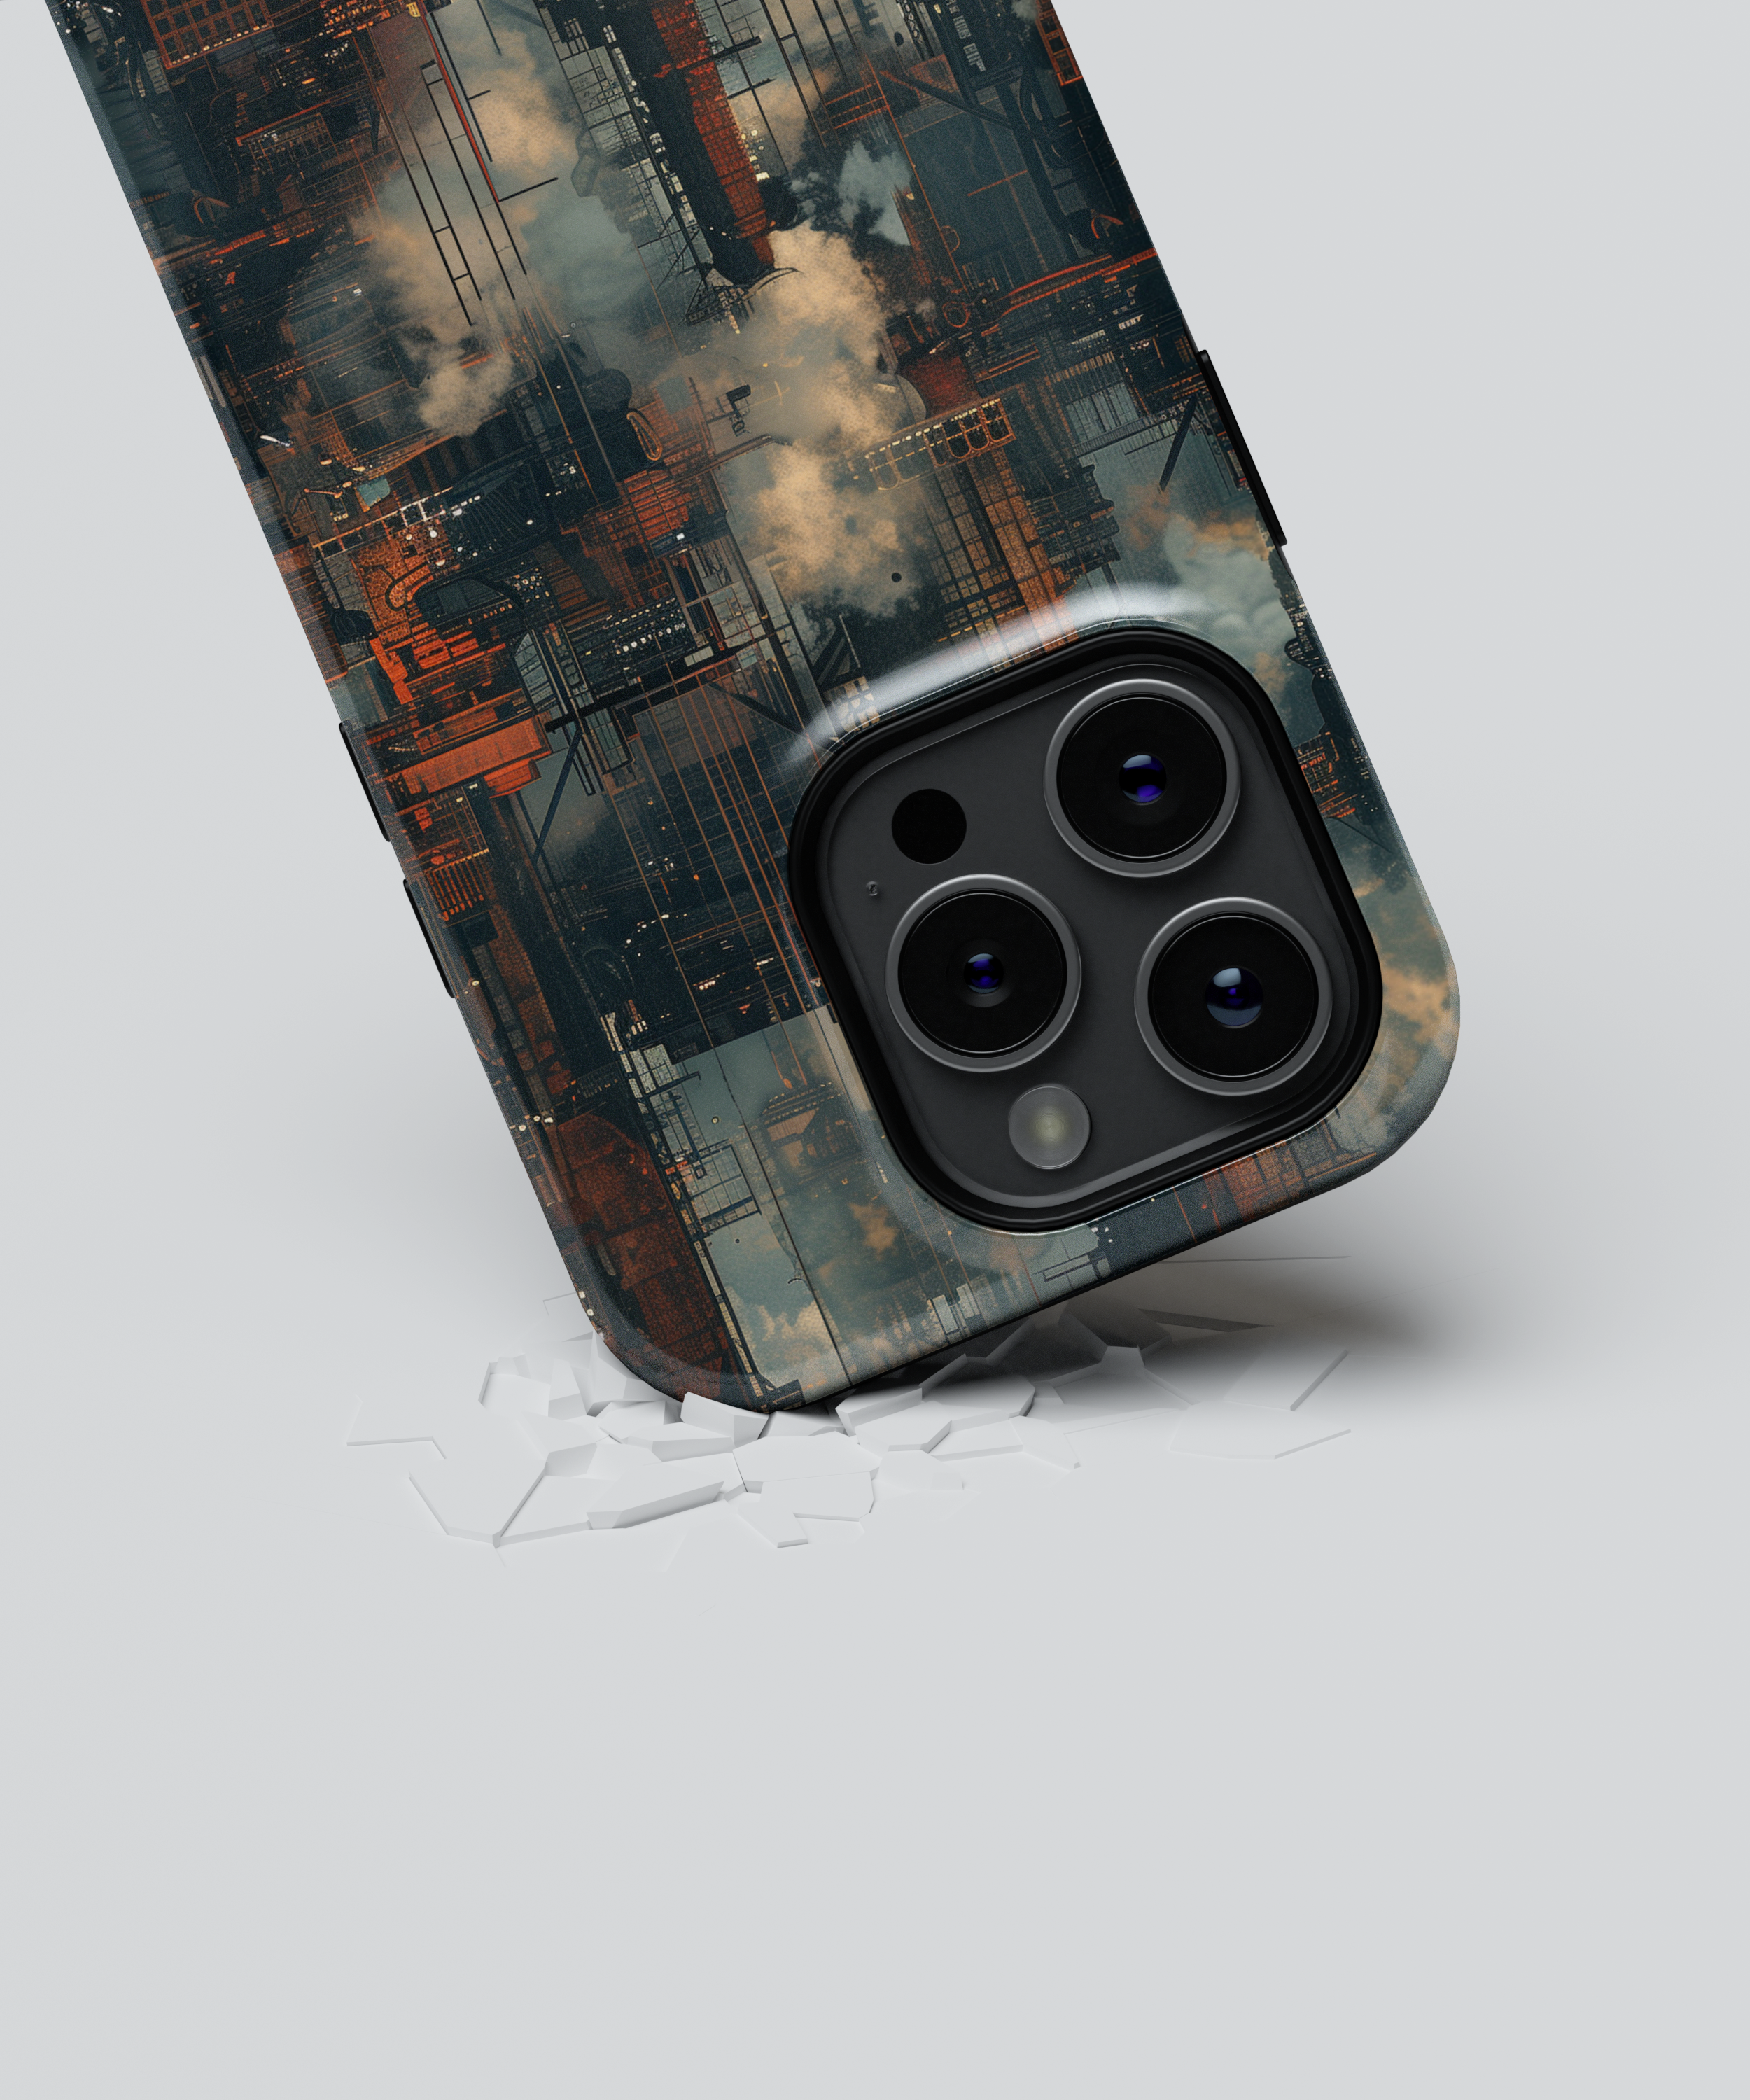 iPhone Tough Case - Steel City Vista - CASETEROID